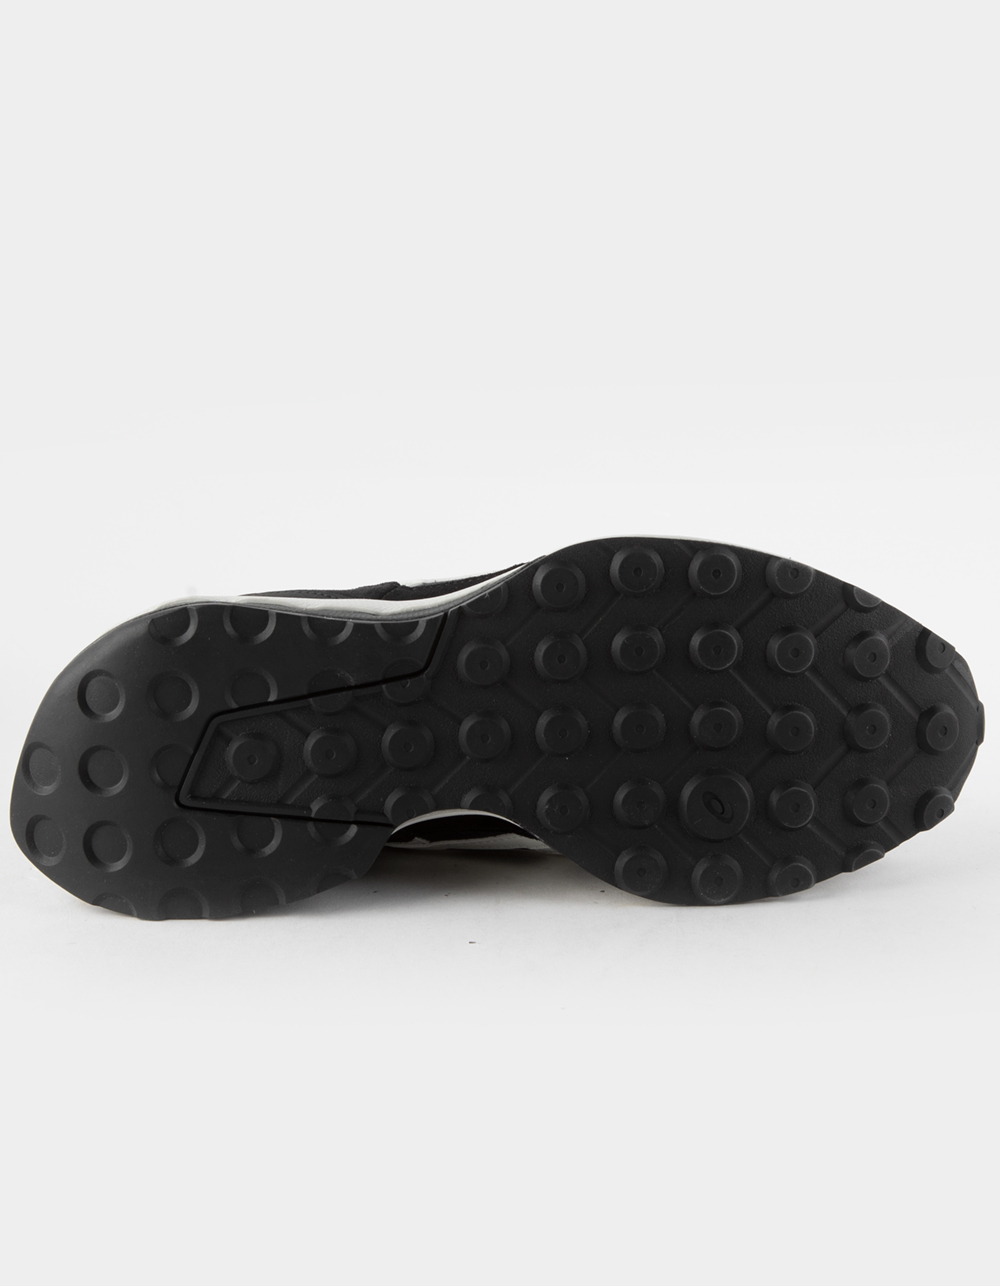 ASICS Jogger X81 Mens Shoes - BLK/WHT | Tillys